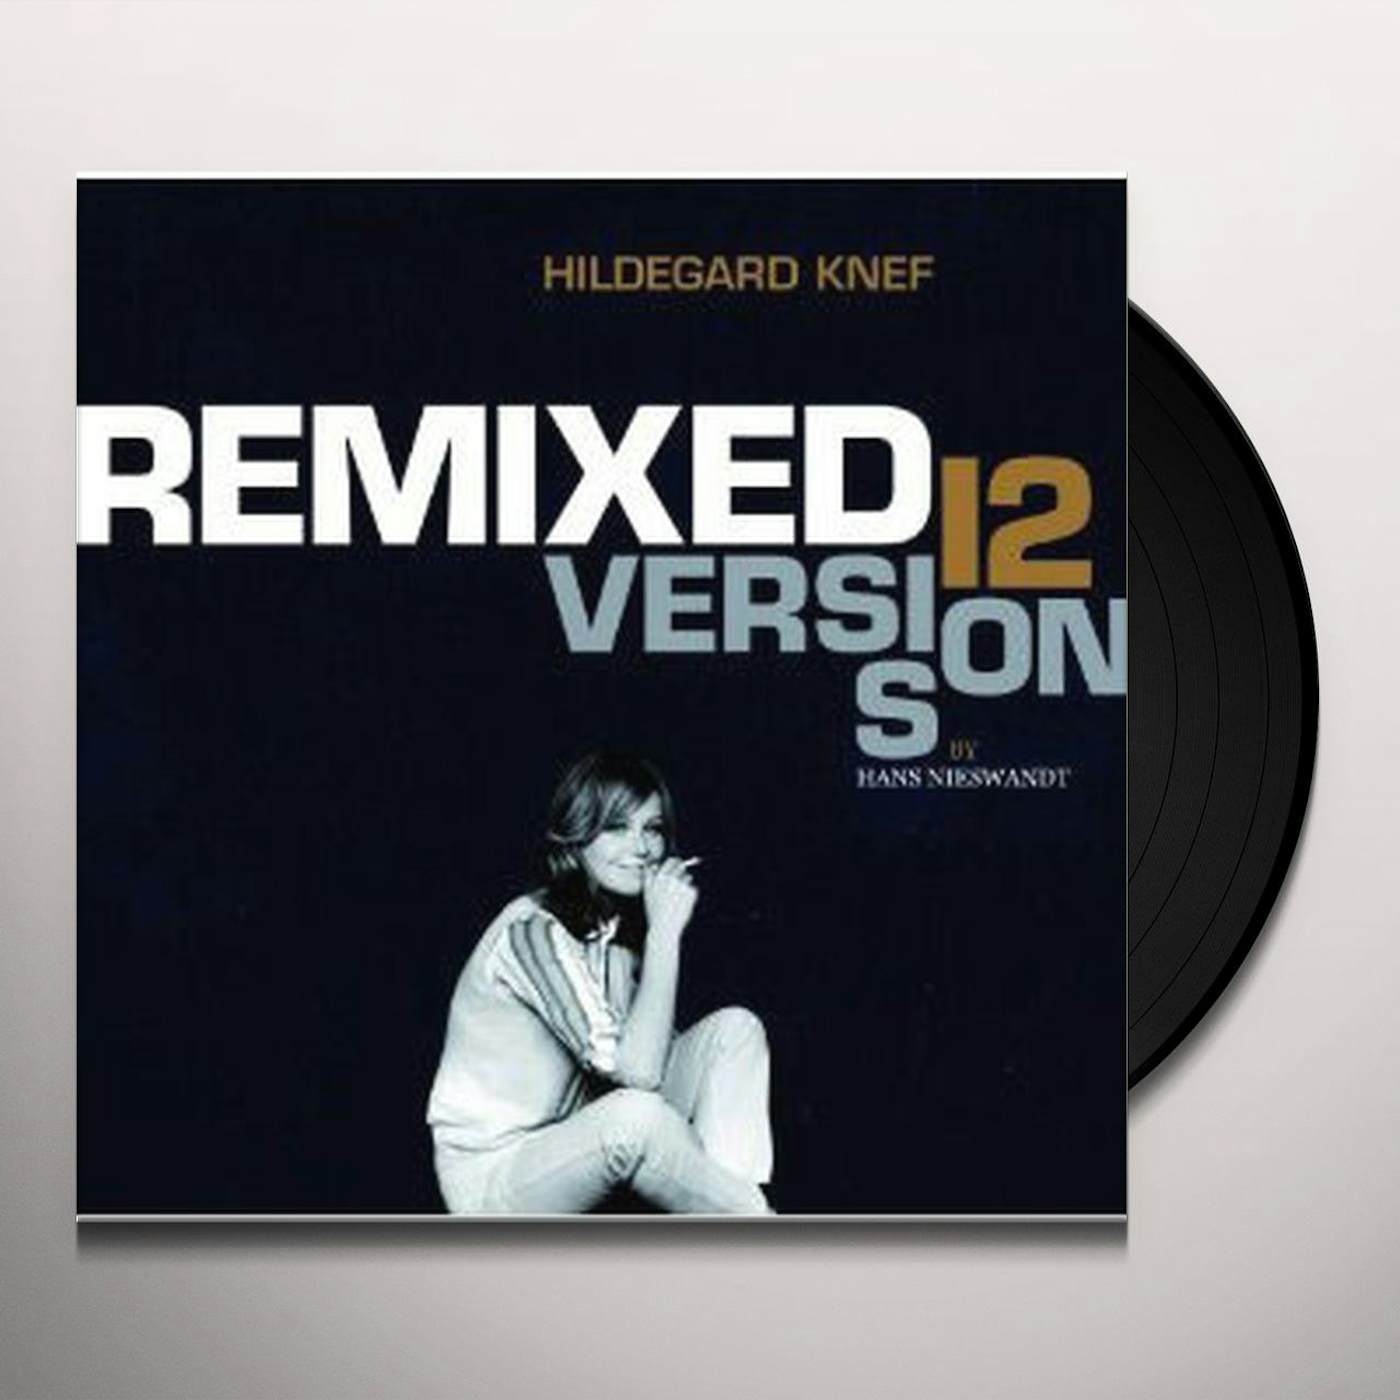 Hildegard Knef REMIXED: 12 VERSIONS BY HANS NIESWANDT Vinyl Record